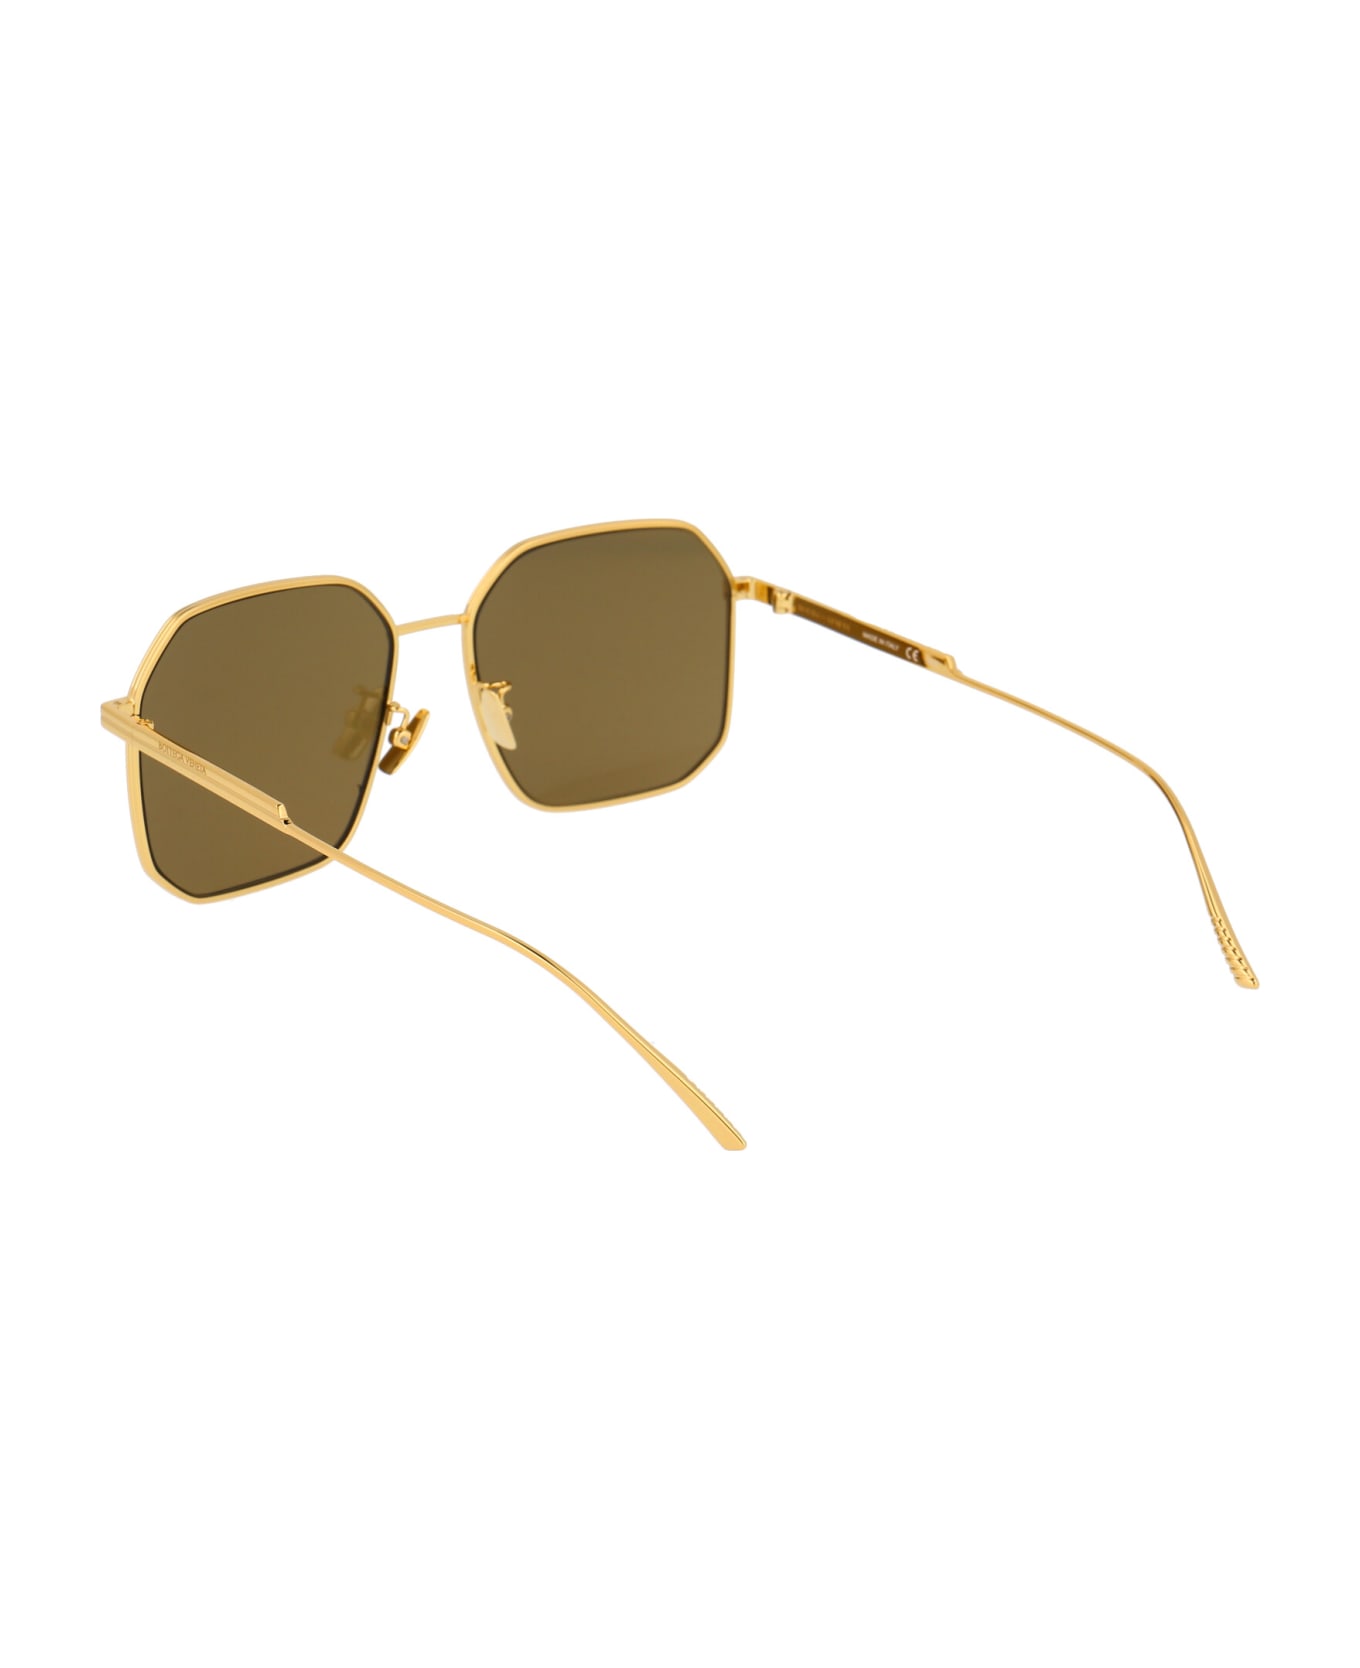 Bottega Veneta Eyewear Bv1108sa Sunglasses - 002 GOLD GOLD BROWN